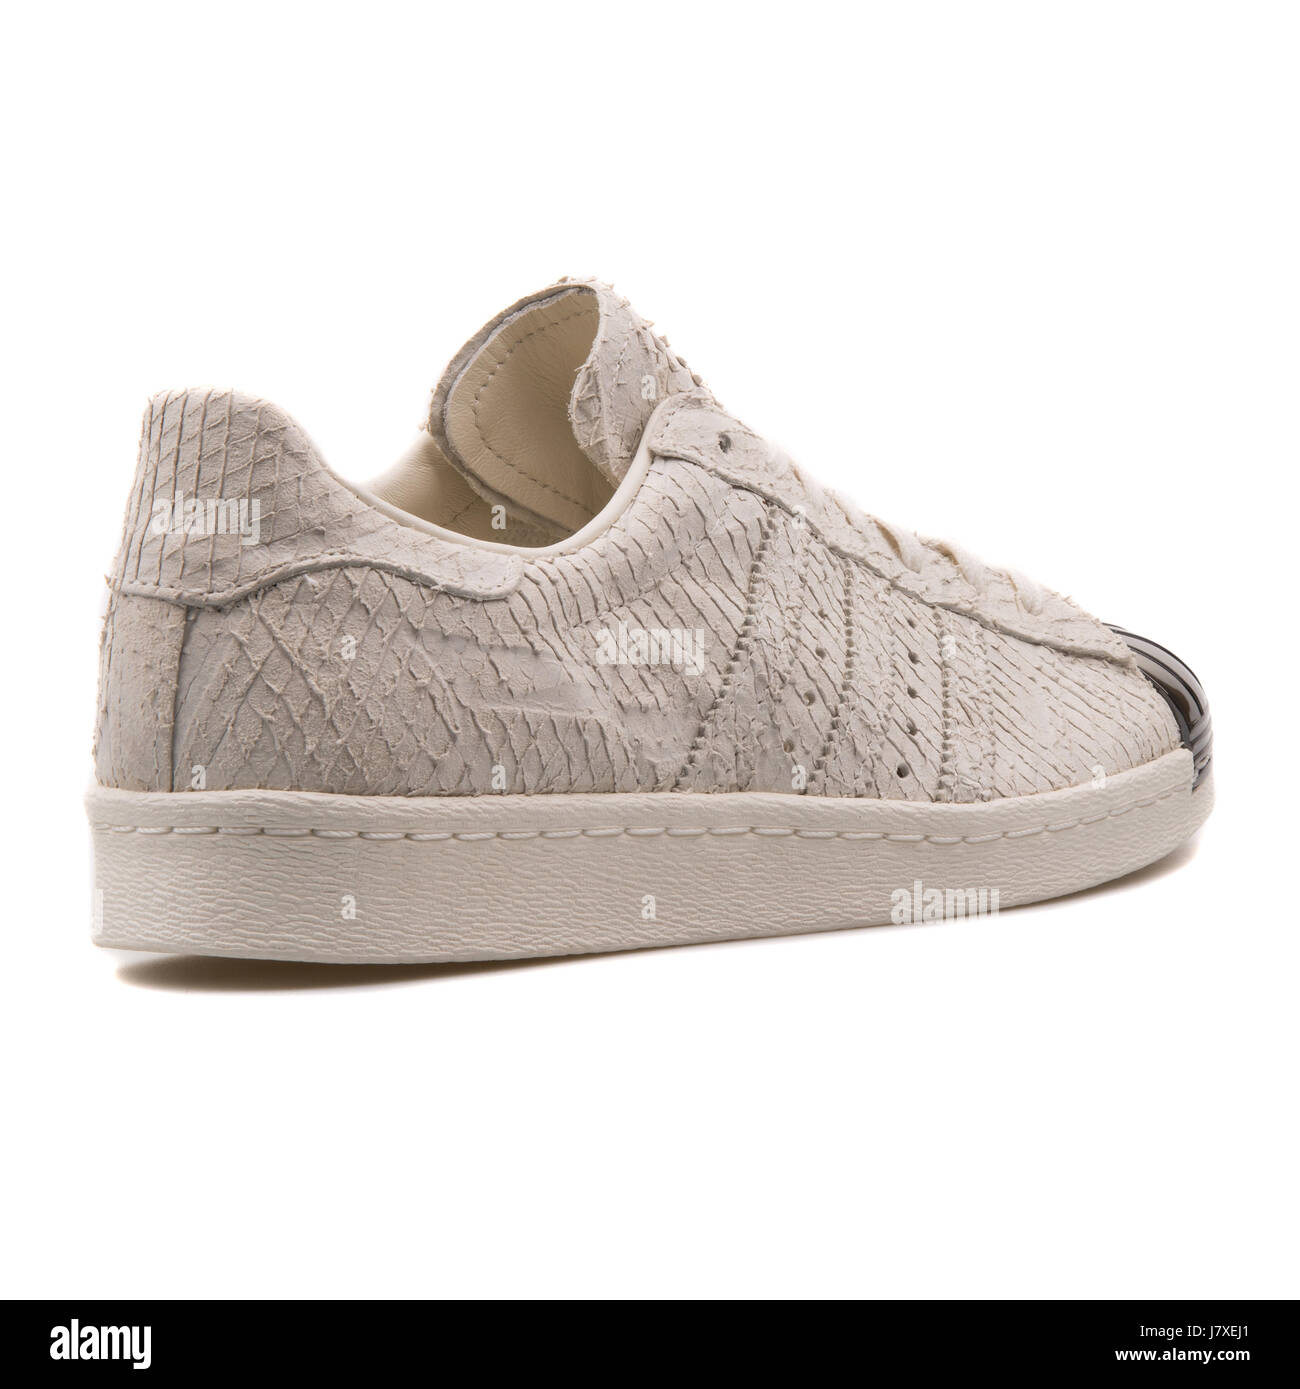 Adidas Superstar 80er Metal Toe W Frauen klassisches weißes Leder mit Snake  Skin Muster Sneakers - S82483 Stockfotografie - Alamy